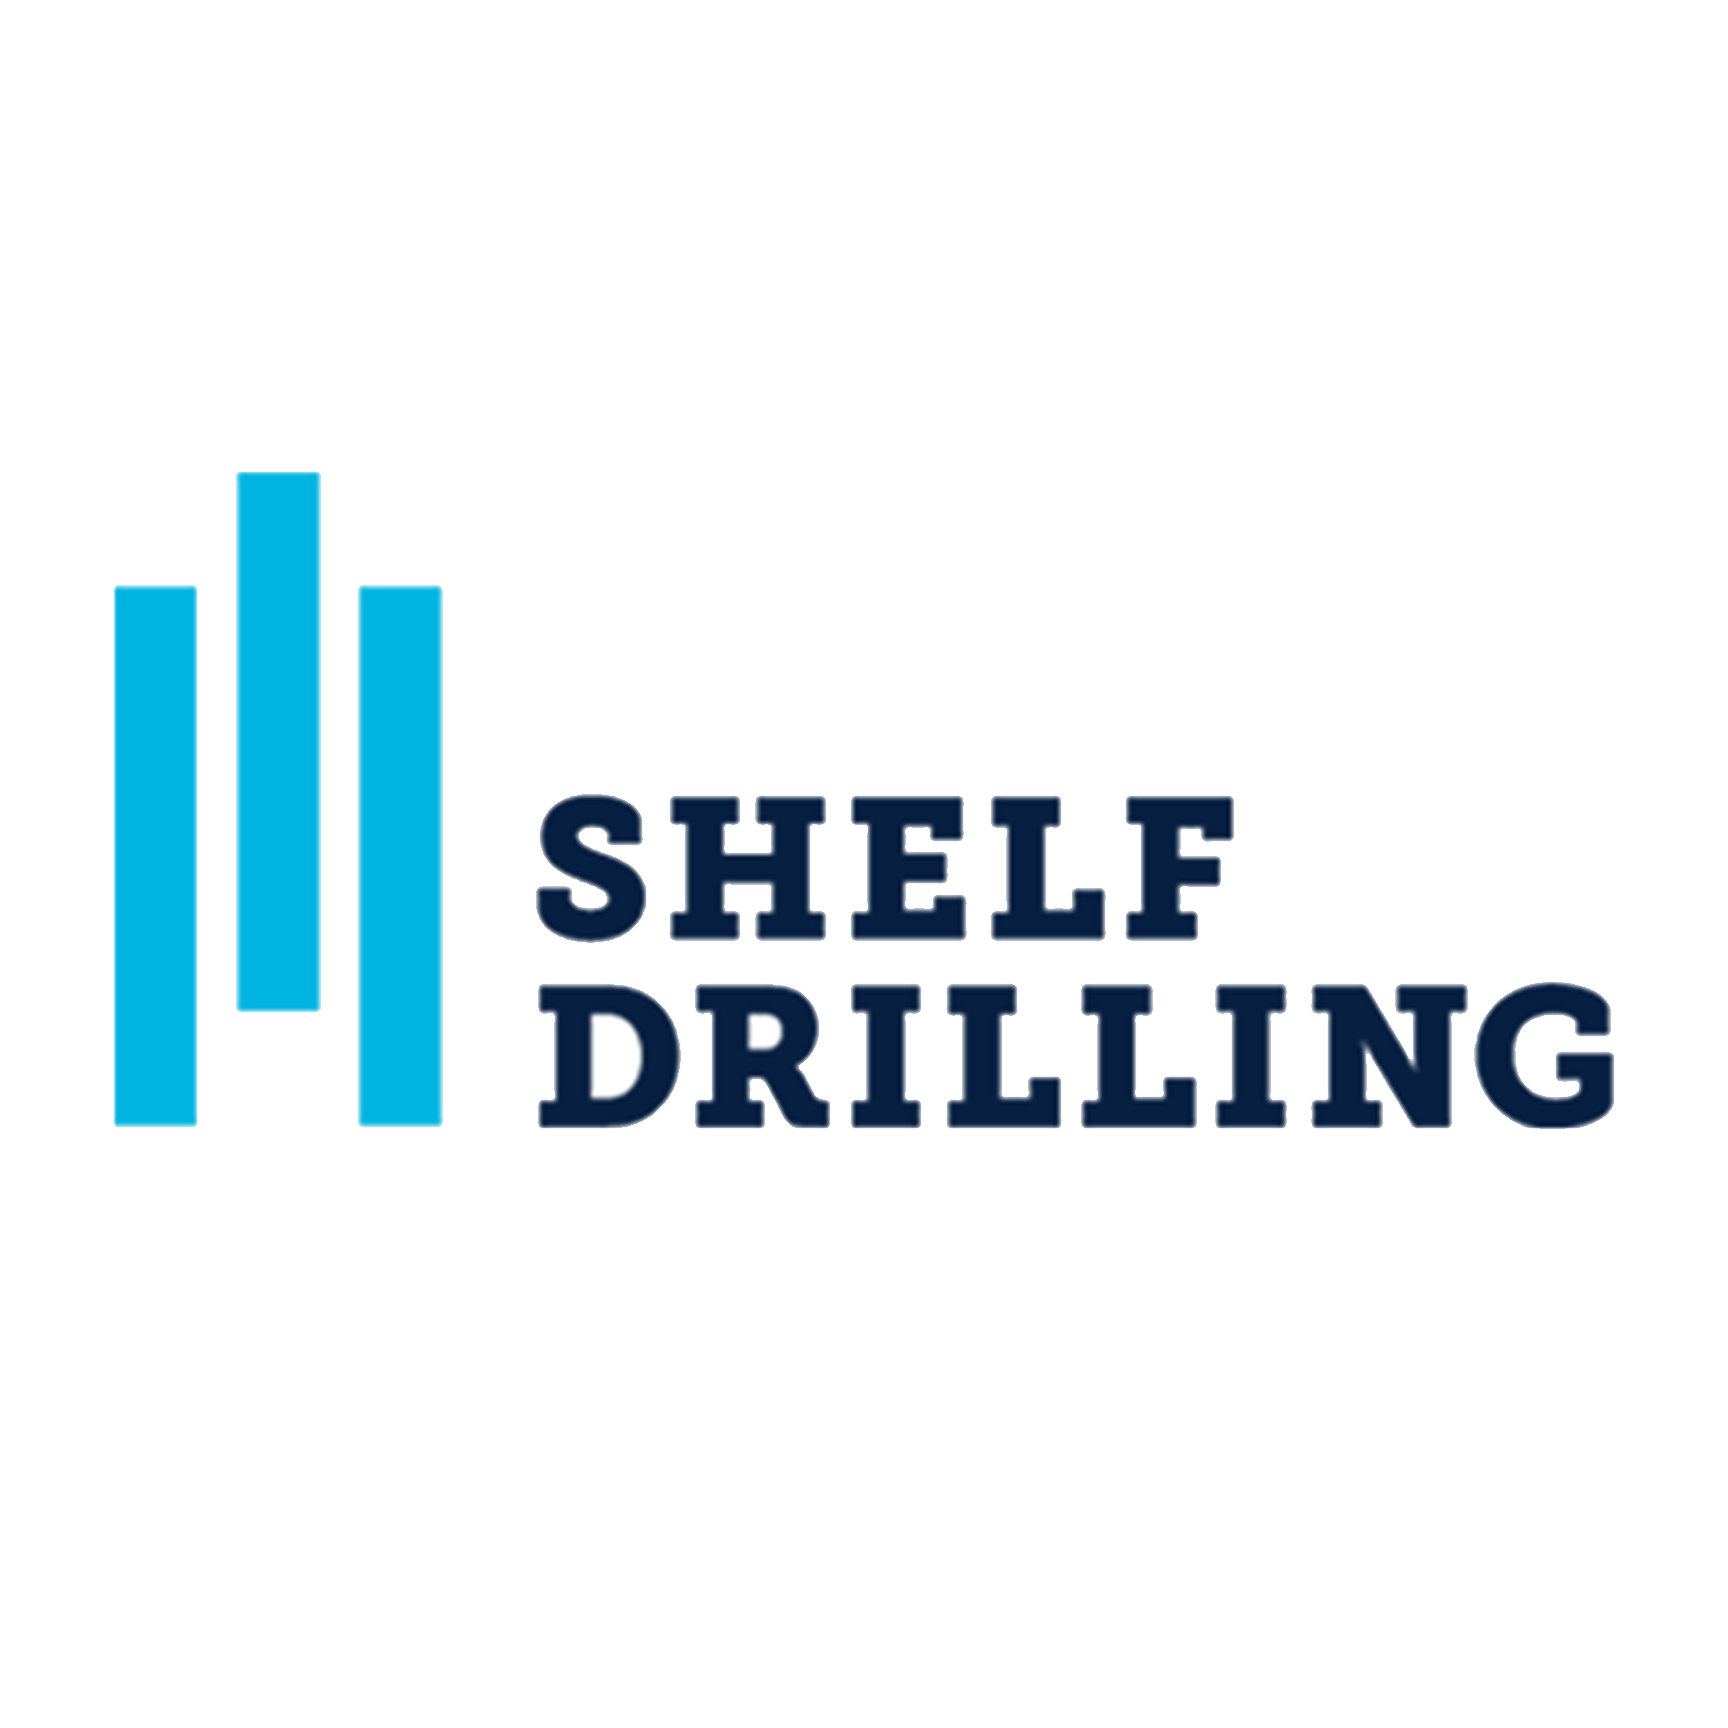 Shelf drilling